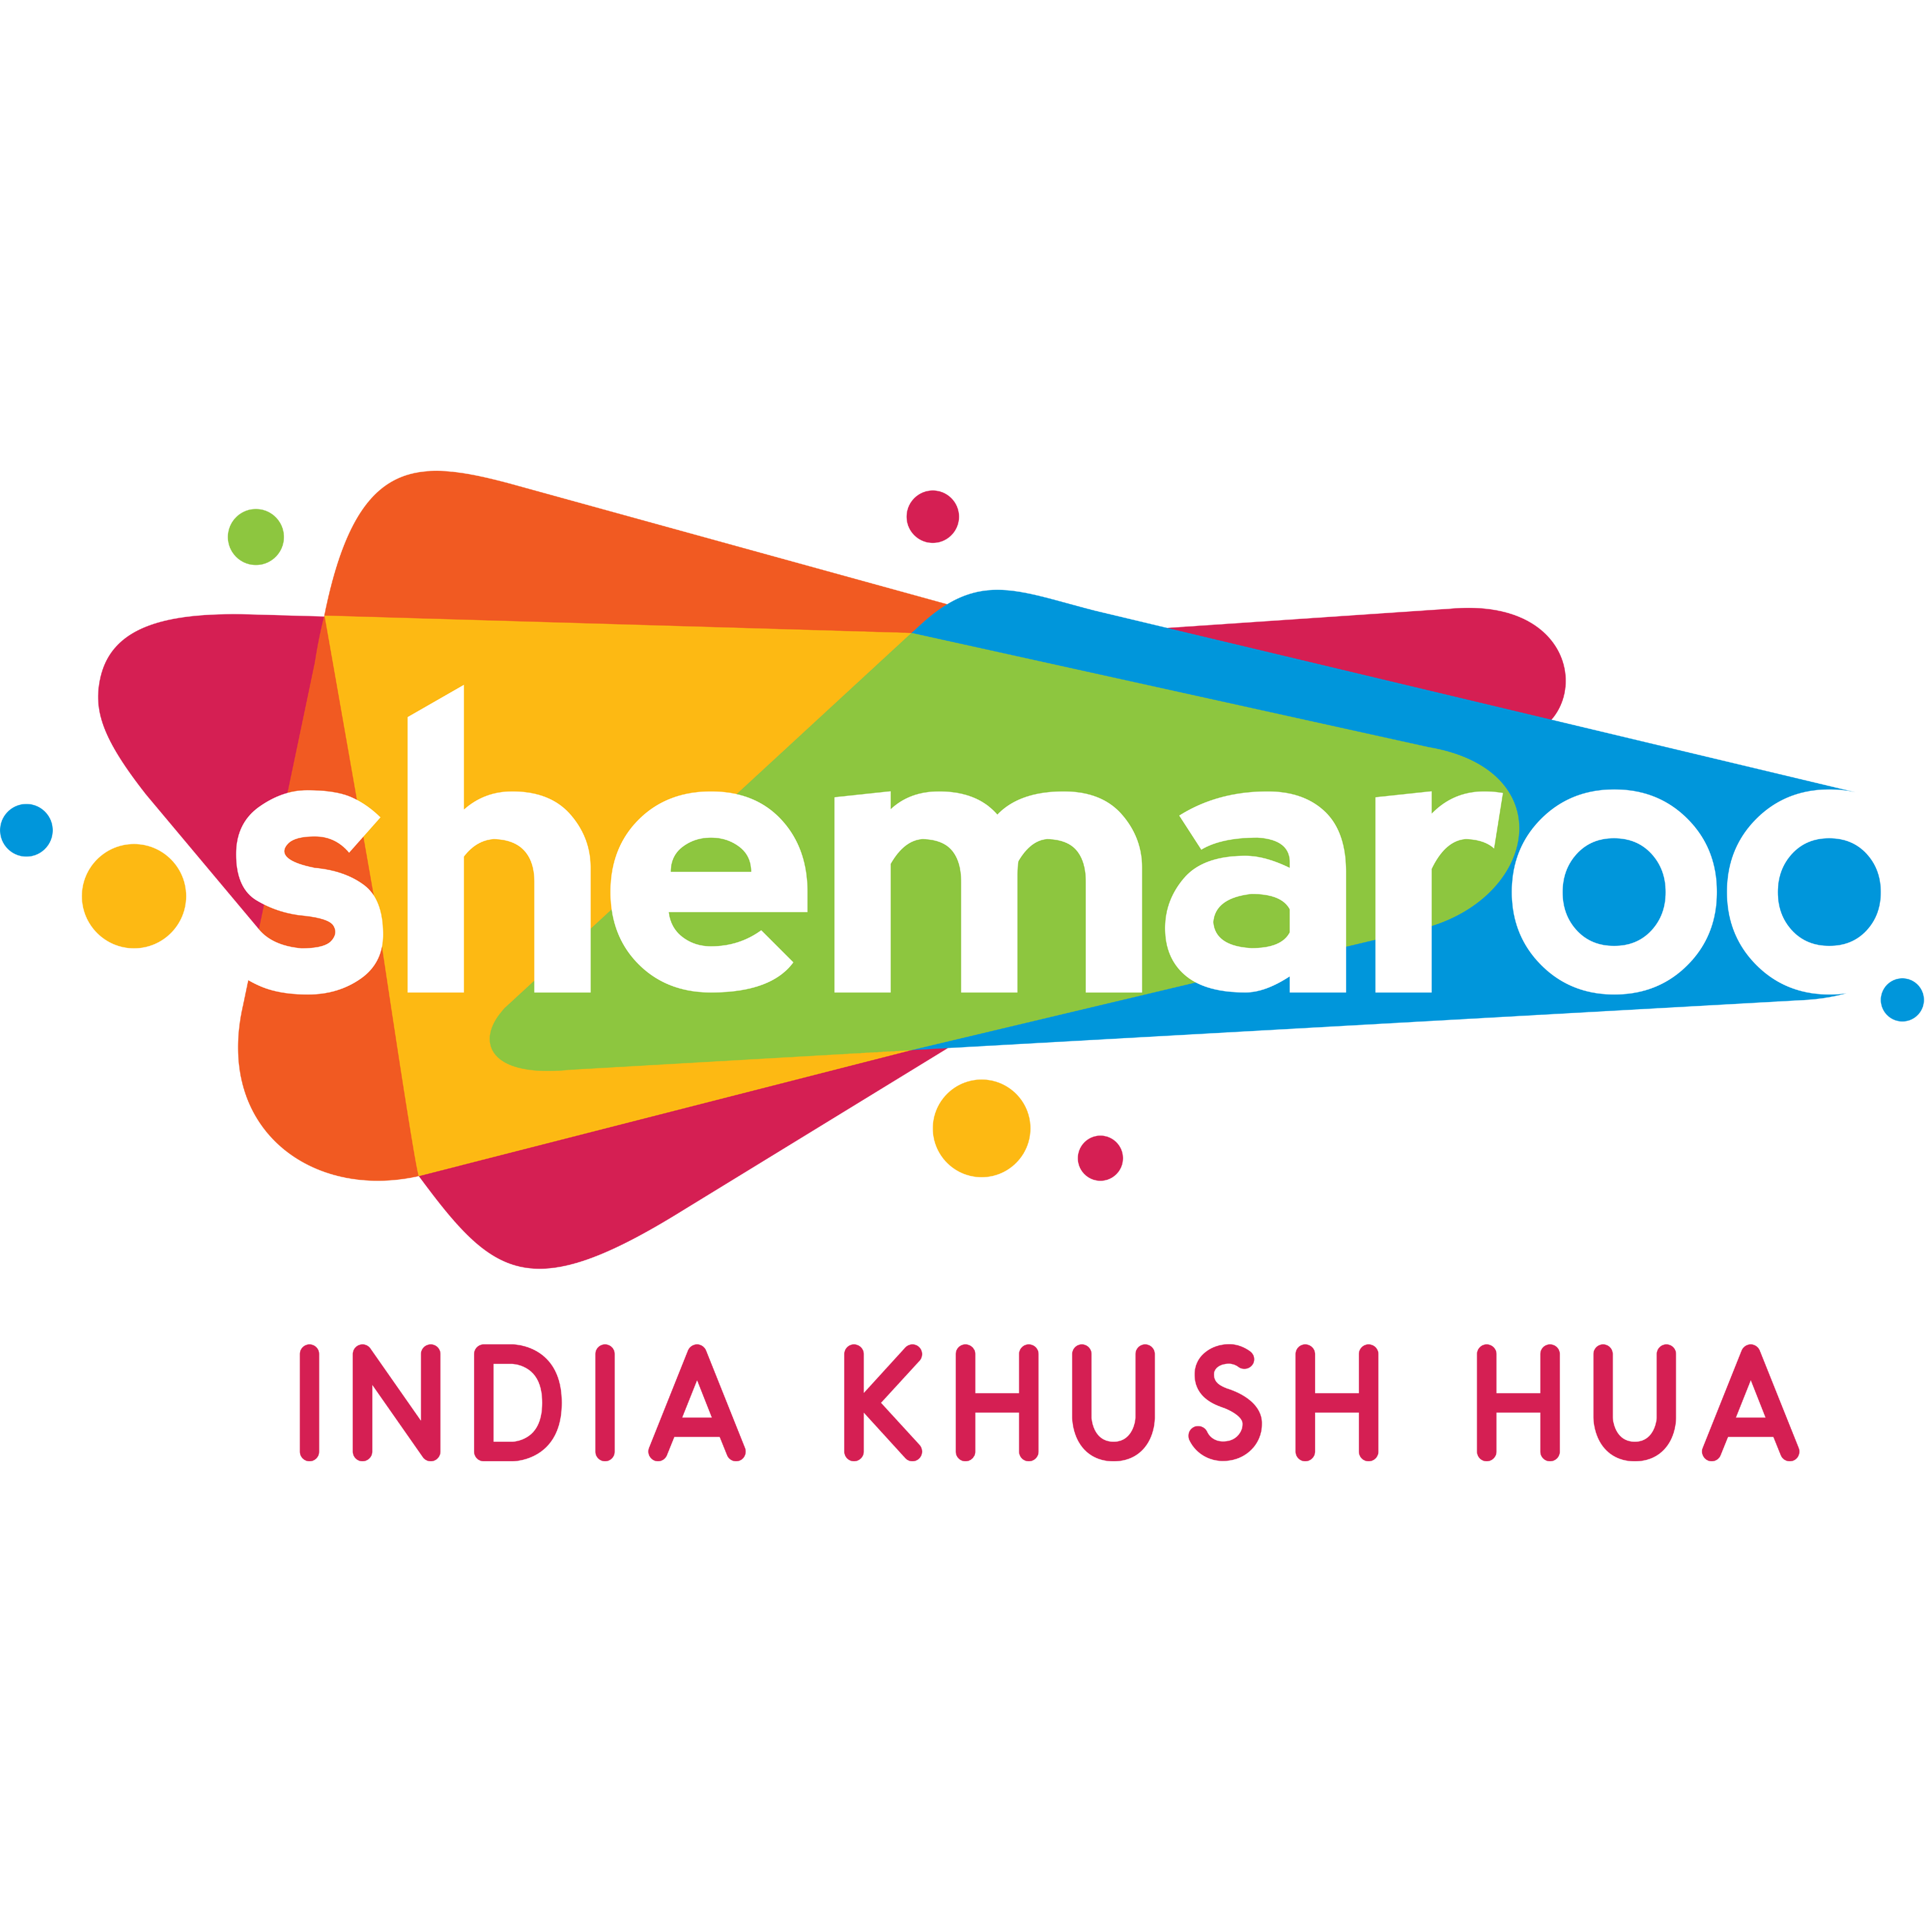 Shemaroo Logo Transparent Image